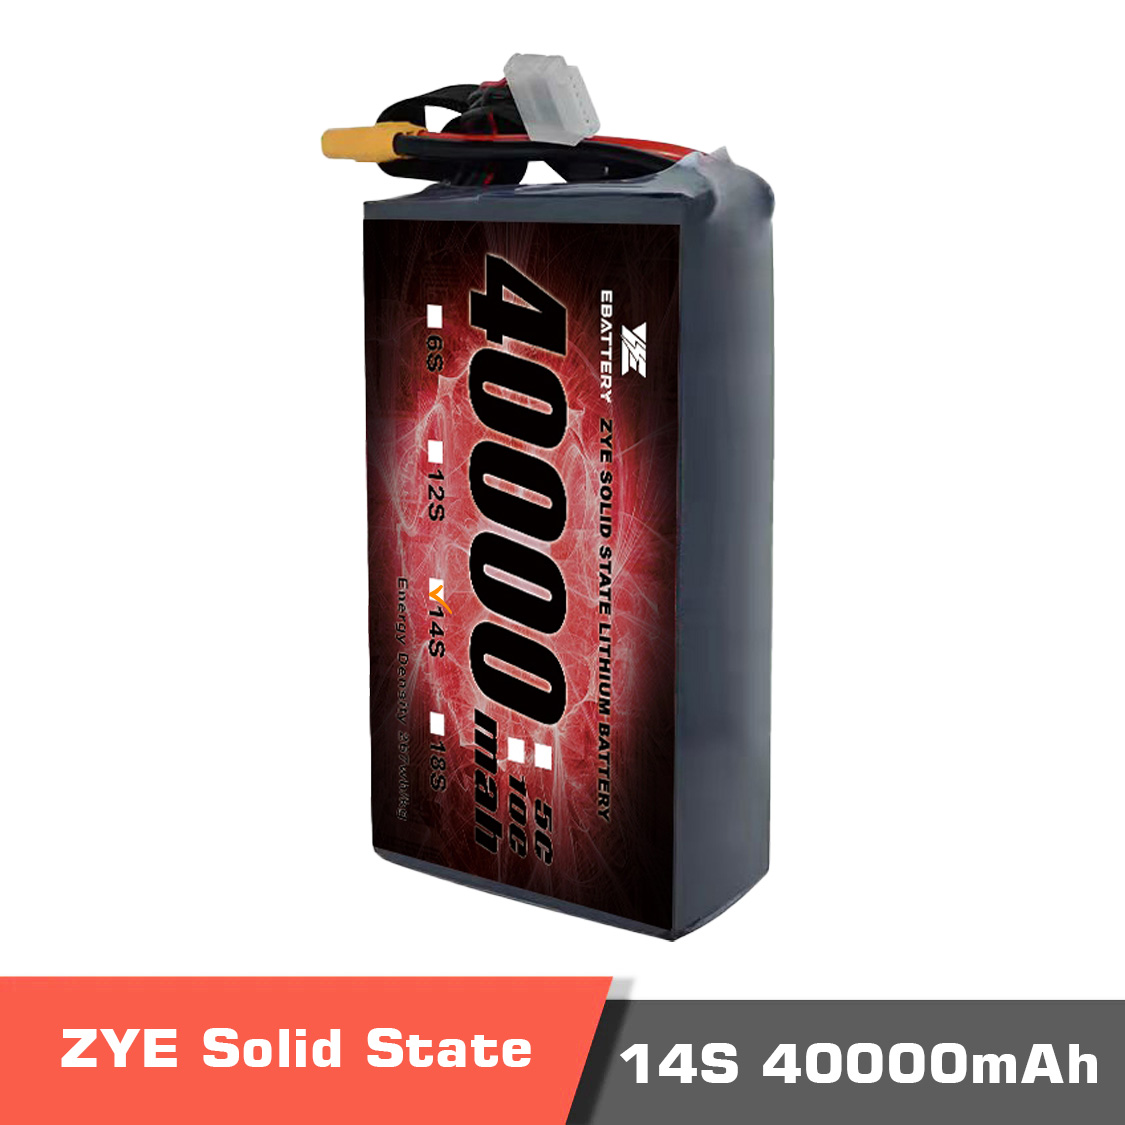 temp40000 14s1 - ZYE Power Ultra HV Semi Solid-State Battery,Ultra HV Semi Solid-State Battery,12S 40000mAh high voltage LiPo Battery,12S 40000mAh HV LiPo Battery,Solid-state LiPo battery,lipo battery,drone battery,14s battery,high energy density battery,UAV,drone,vtol,ZYE Power,ZYE power Battery - MotioNew - 2